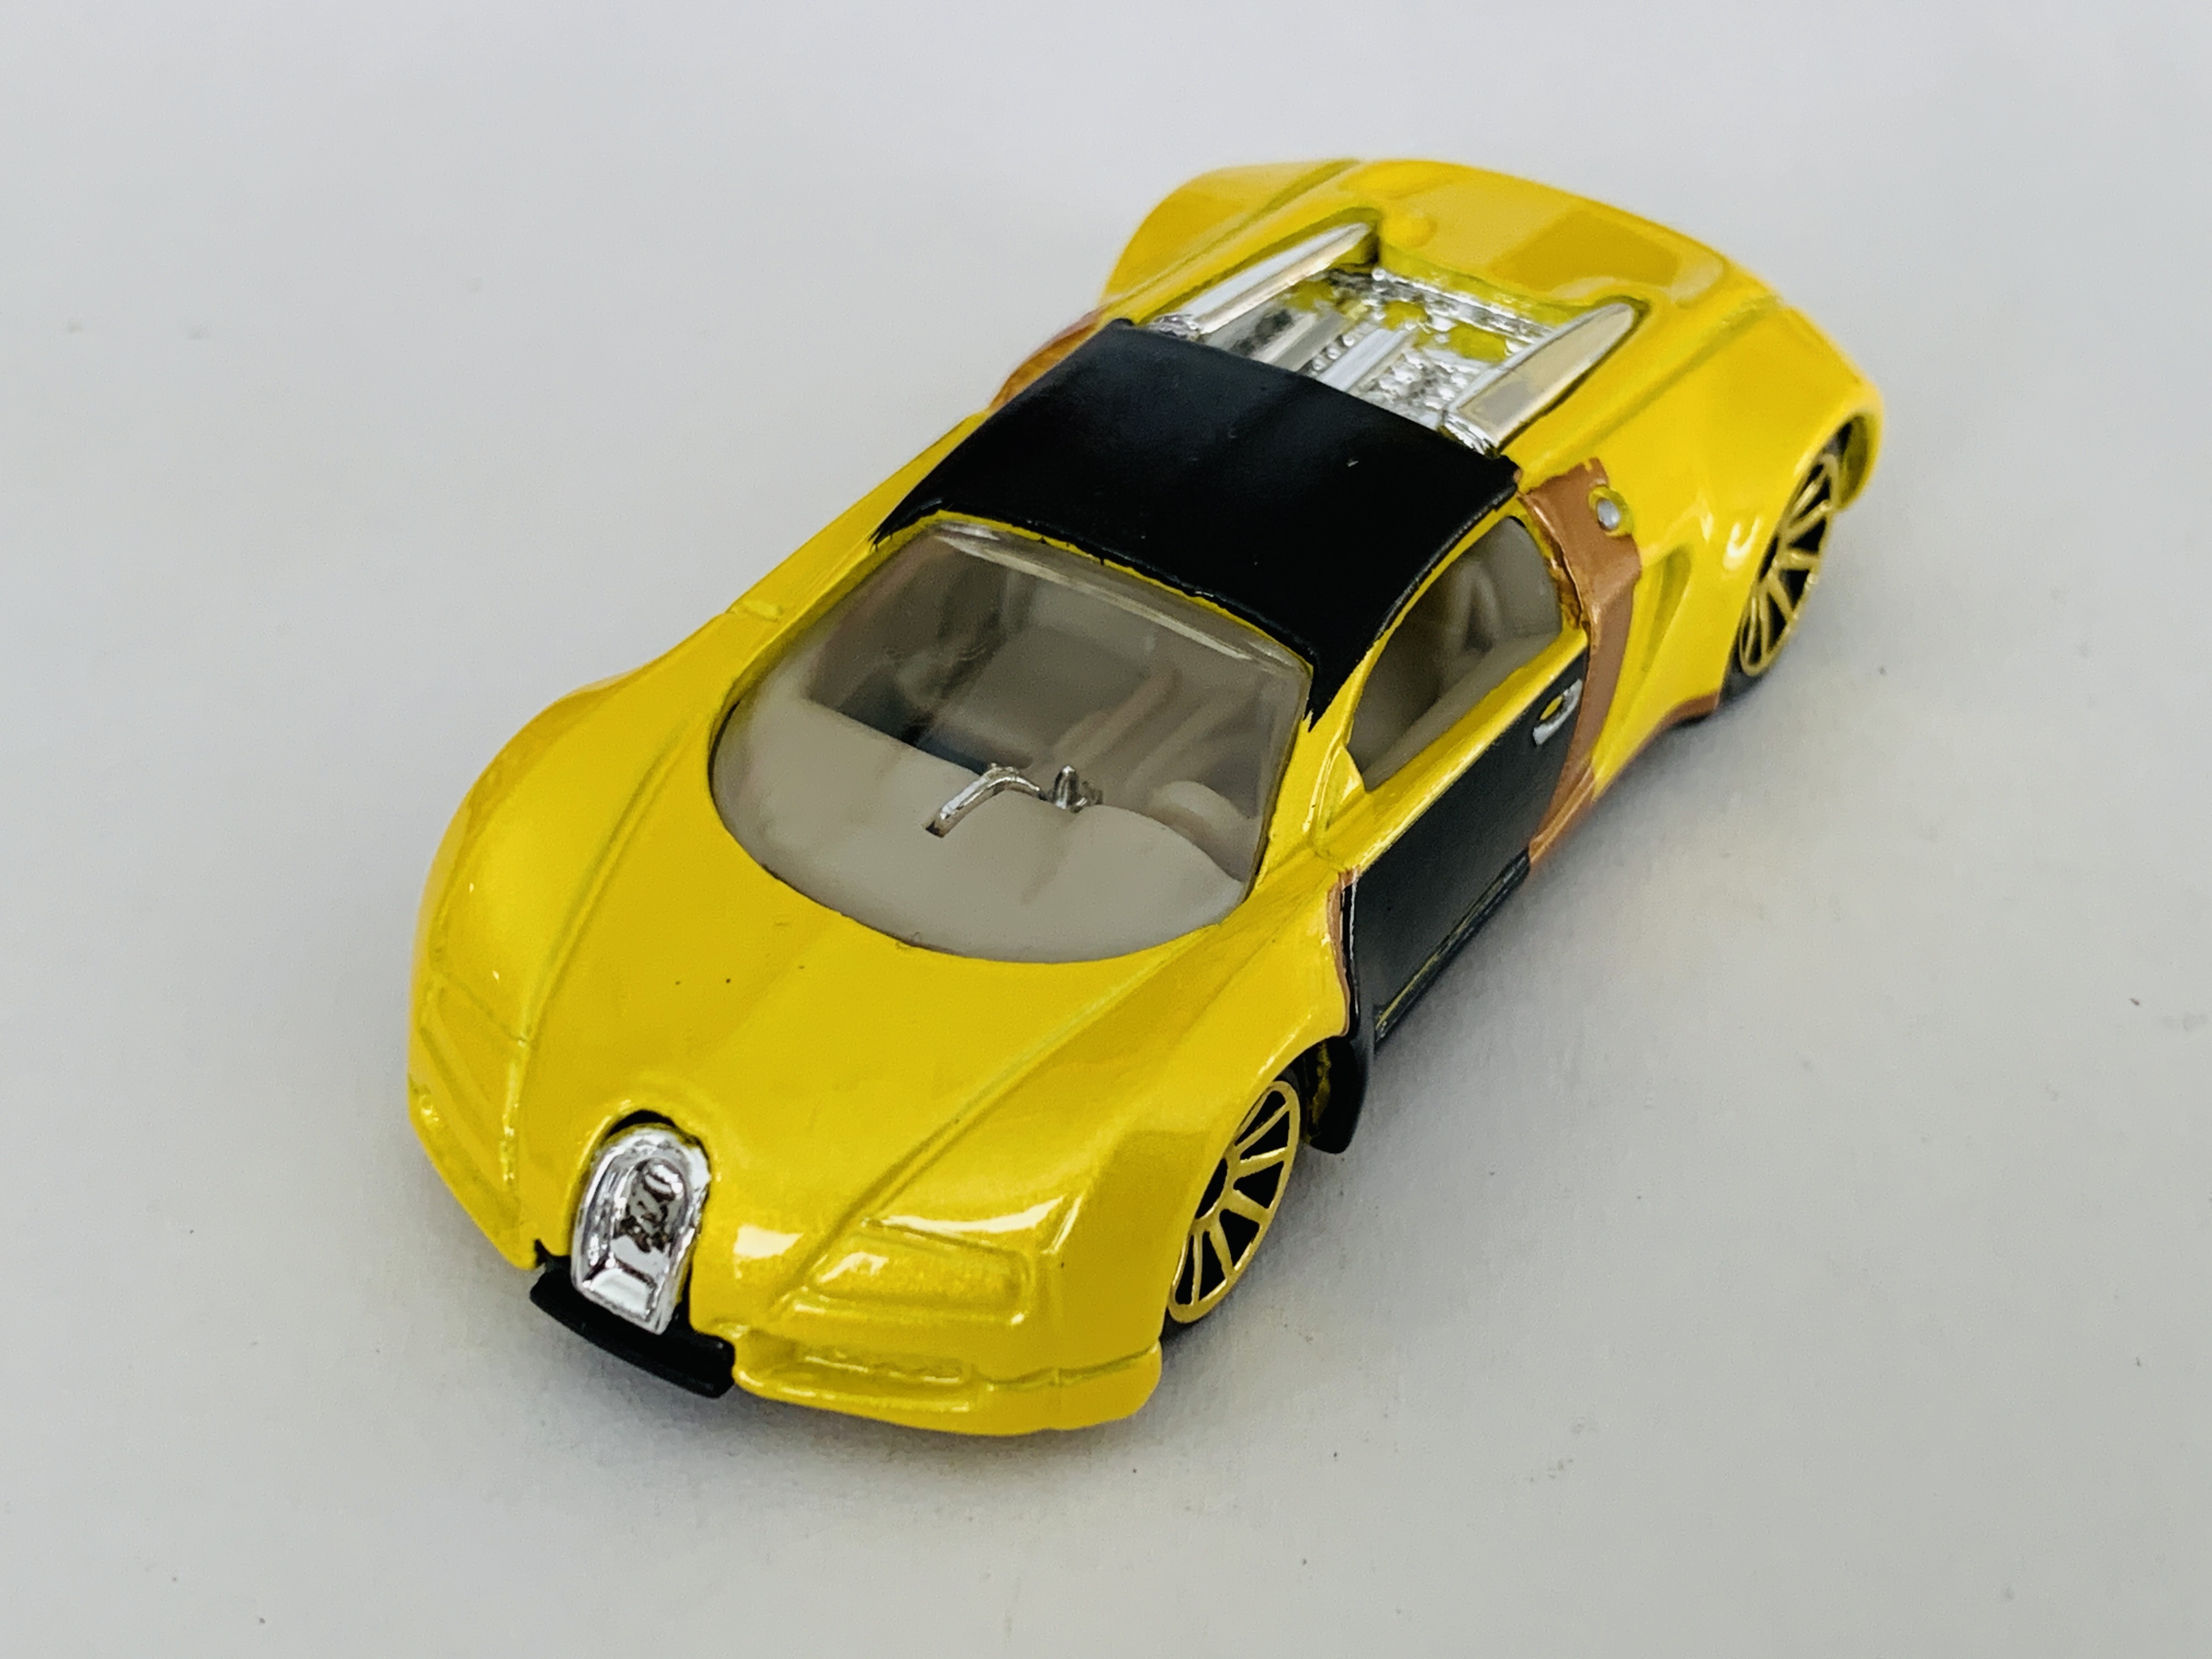 Hot Wheels 2007 Mystery Car Bugatti Veyron - Yellow